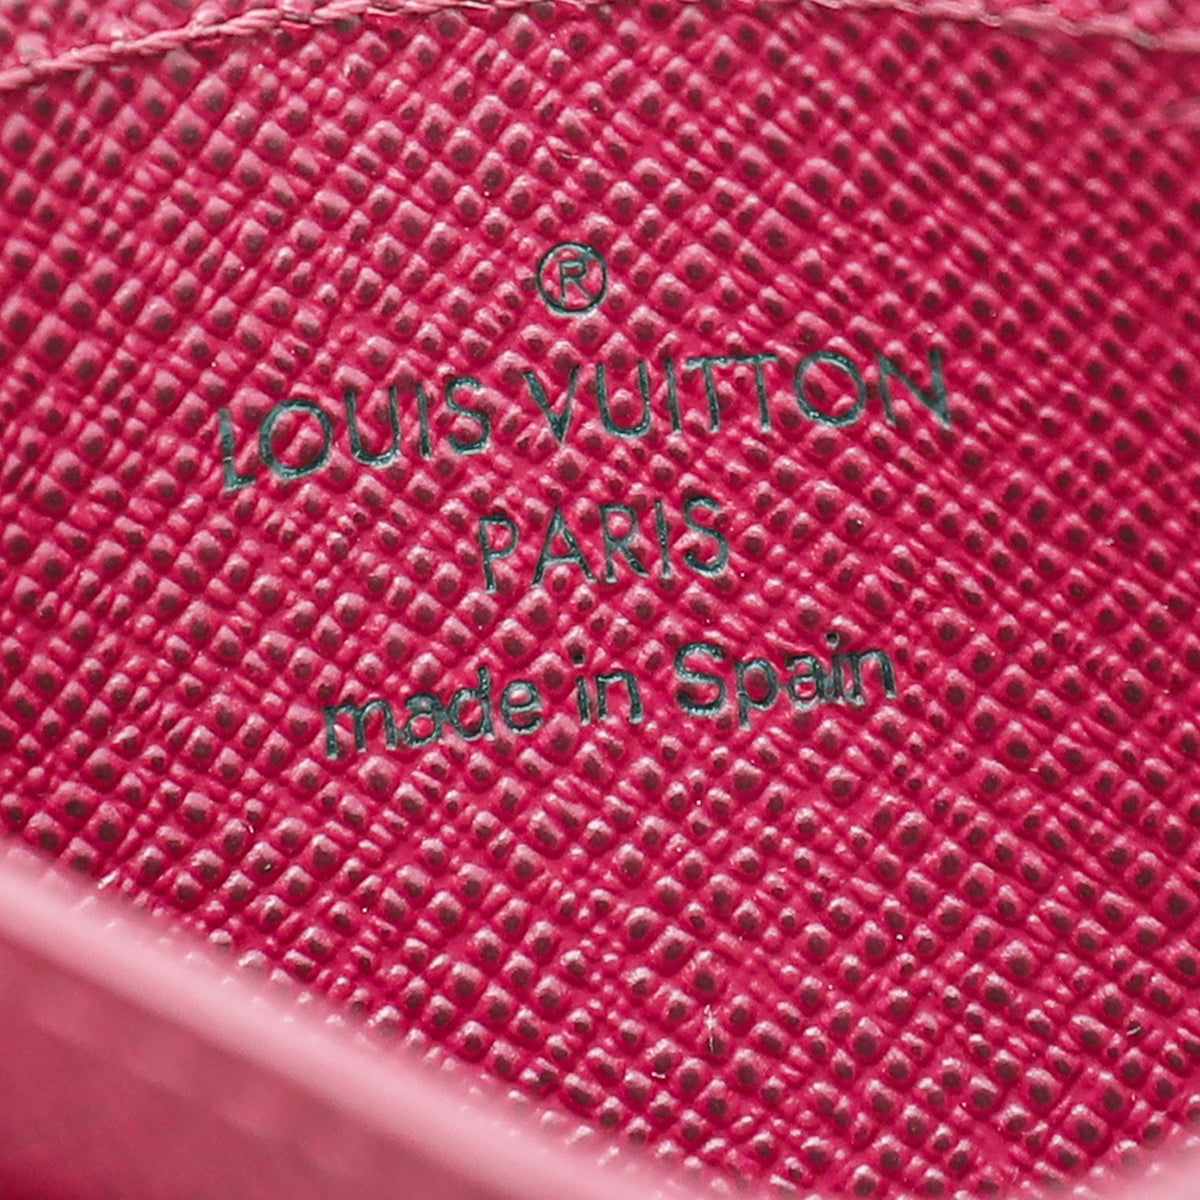 Louis Vuitton Monogram Fuchsia Card Holder – The Closet